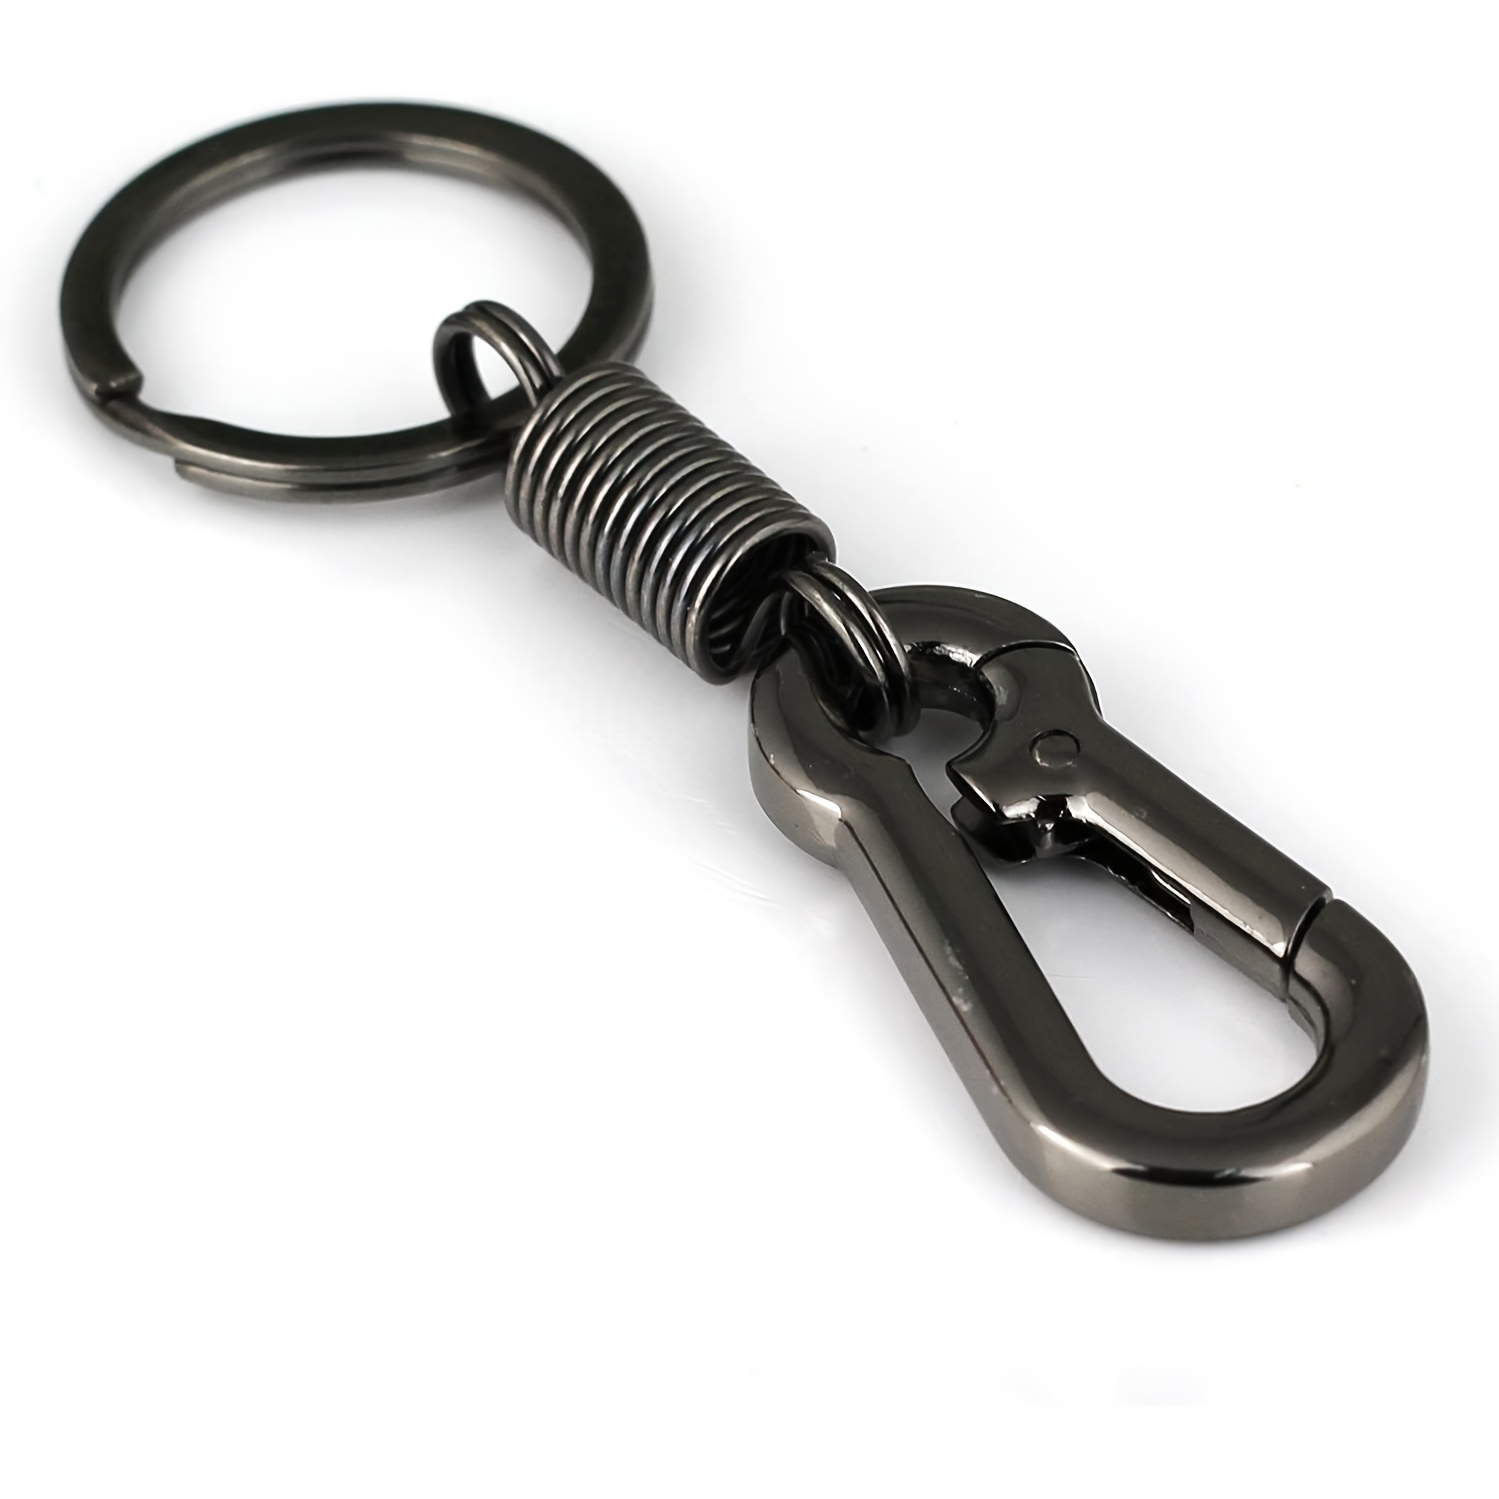 Keychain Rings, Keychain Hook, Carabiner Keychain, Key Chain Clip